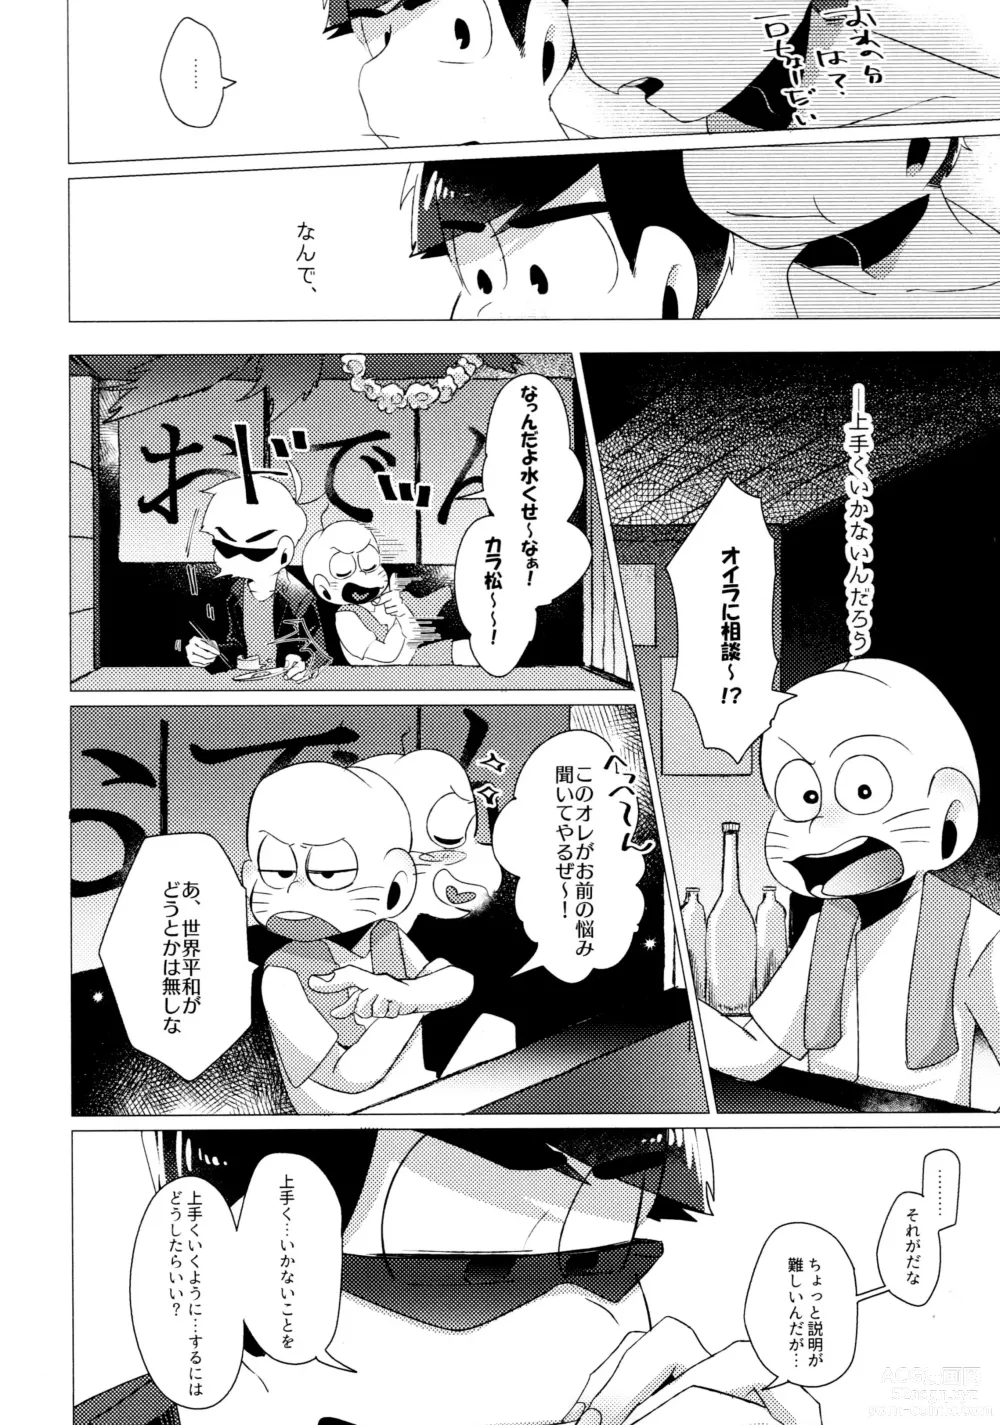 Page 6 of doujinshi Furachina Bokura